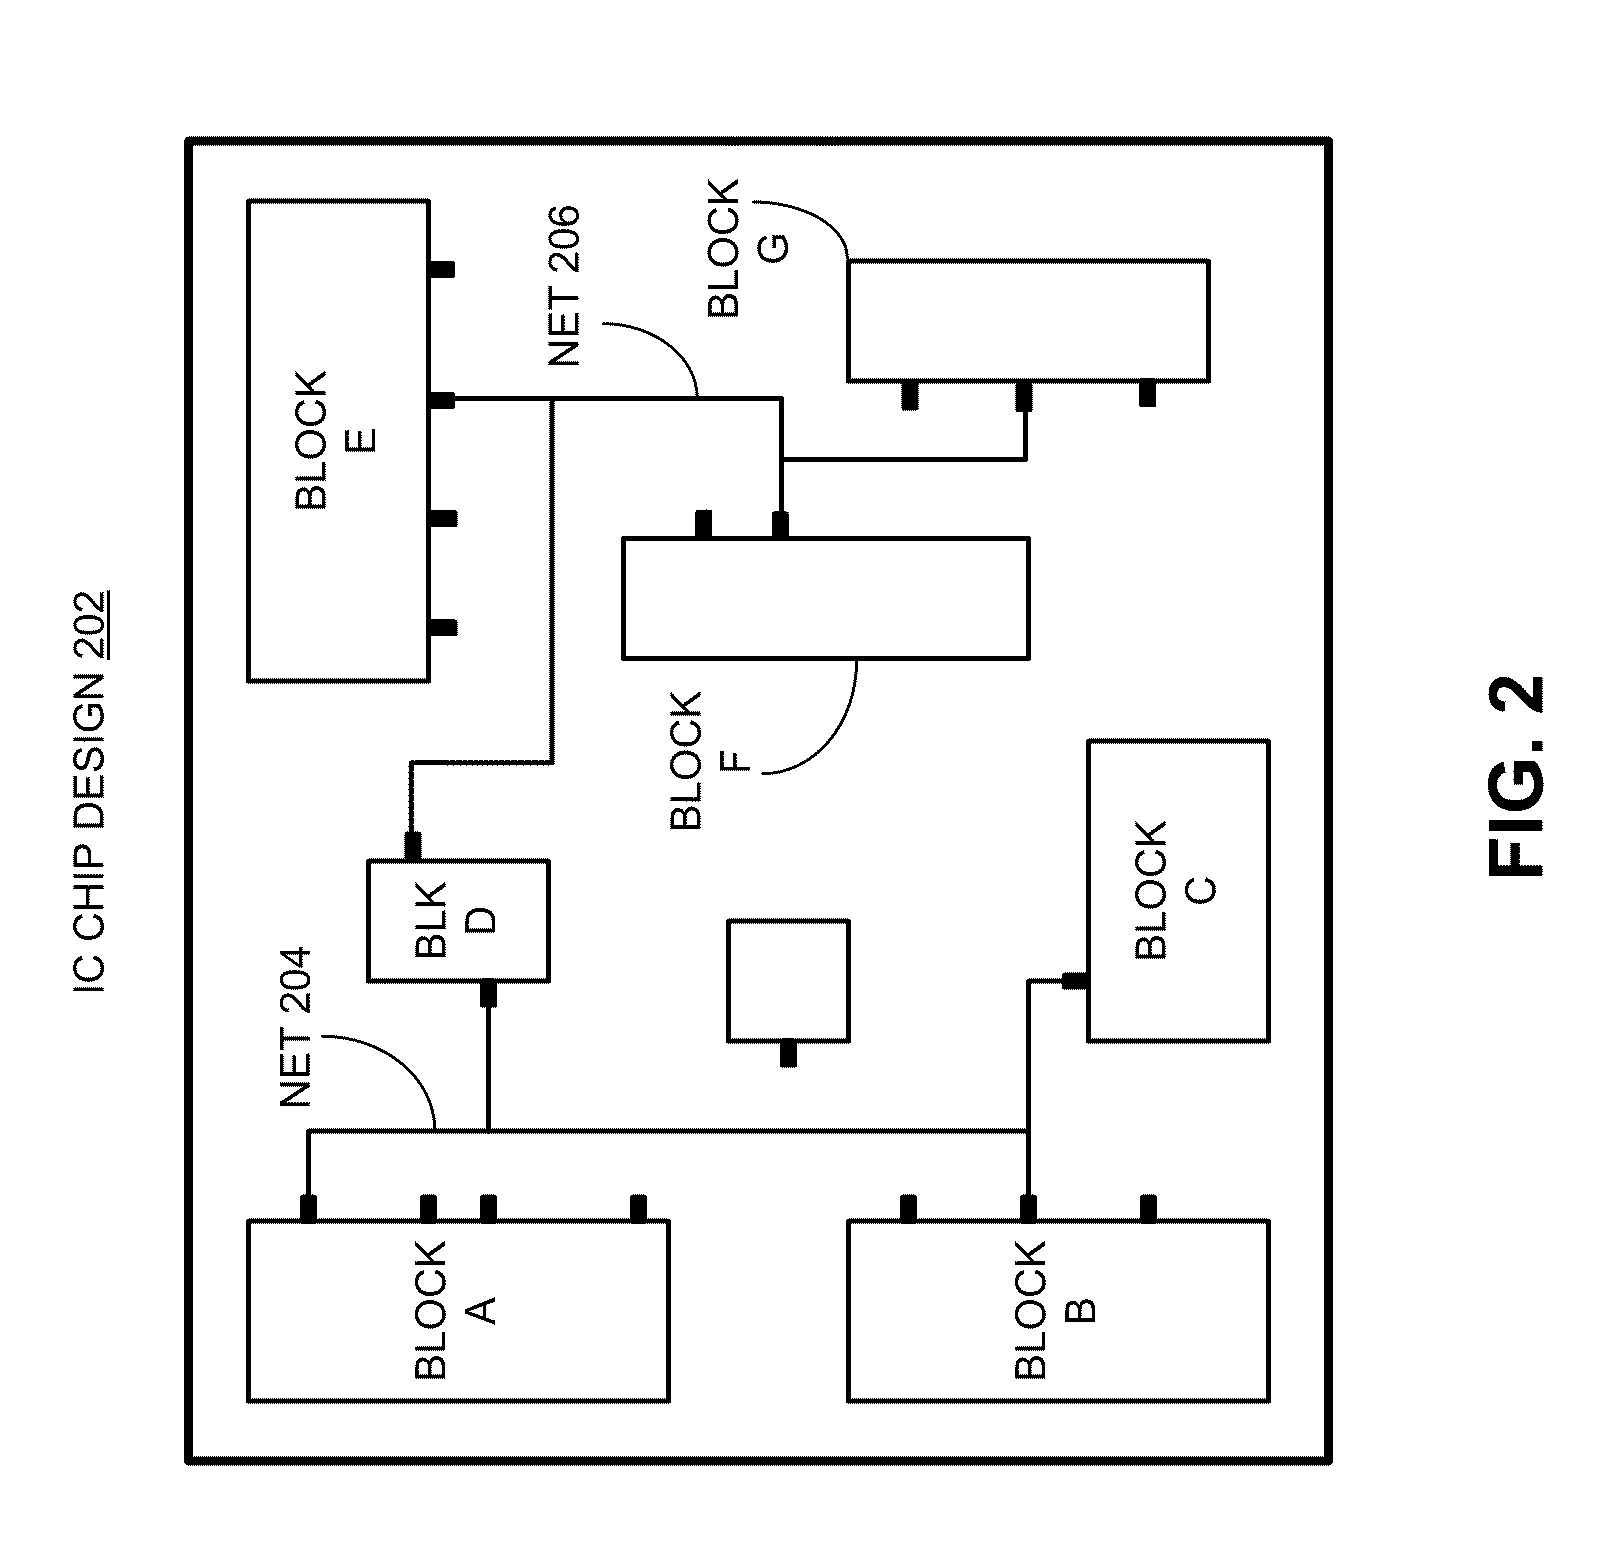 Method and apparatus for performing redundant via insertion during circuit design